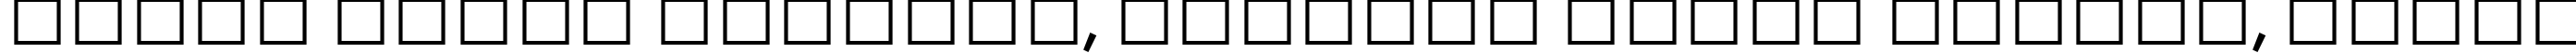 Пример написания шрифтом Tw Cen MT Bold Italic текста на белорусском